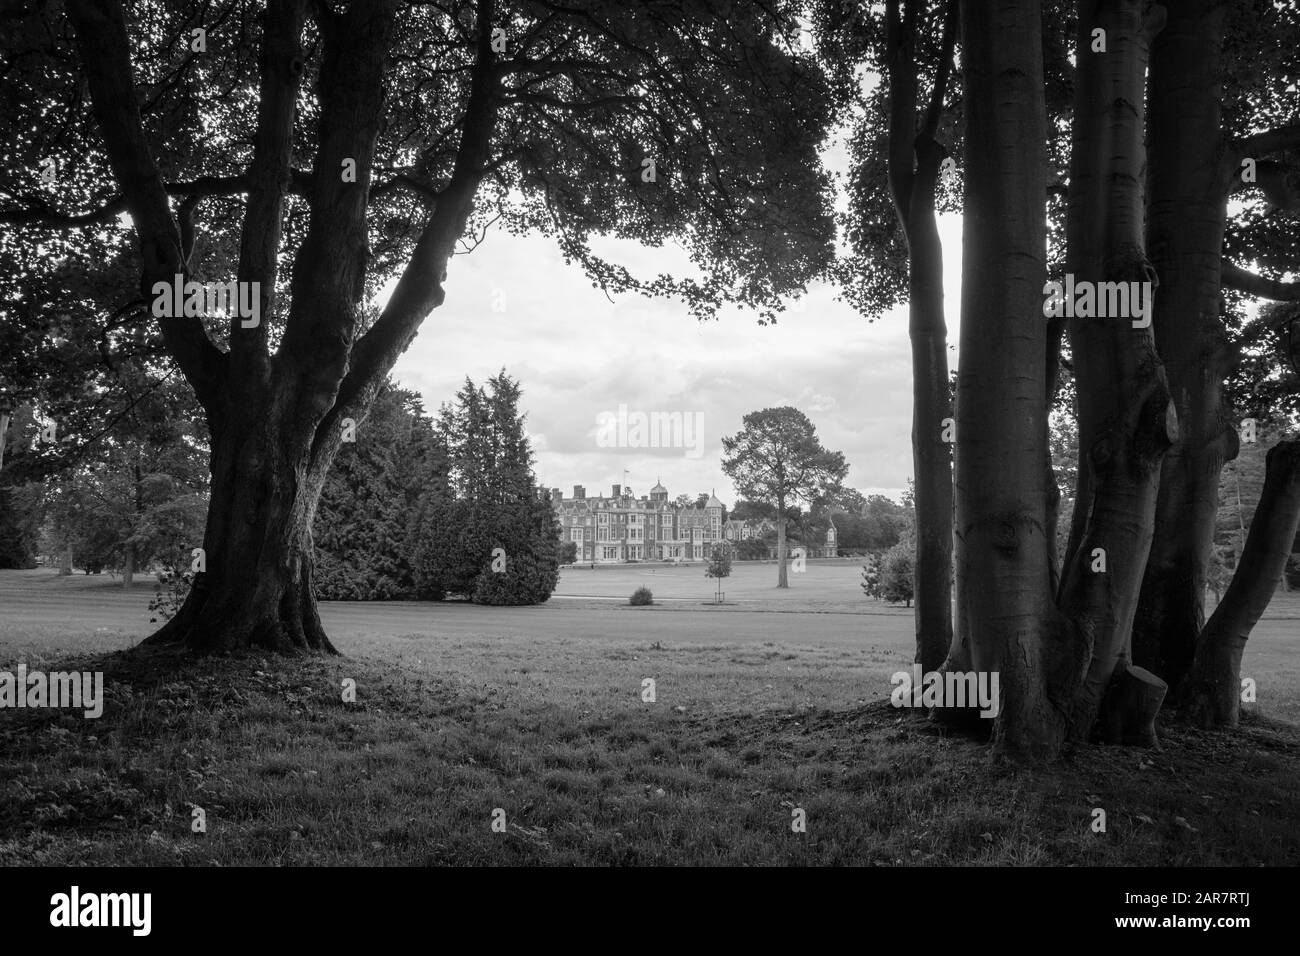 Exterior View of Sandringham Royal residence from the gardens in monochrome black & white Stock Photo